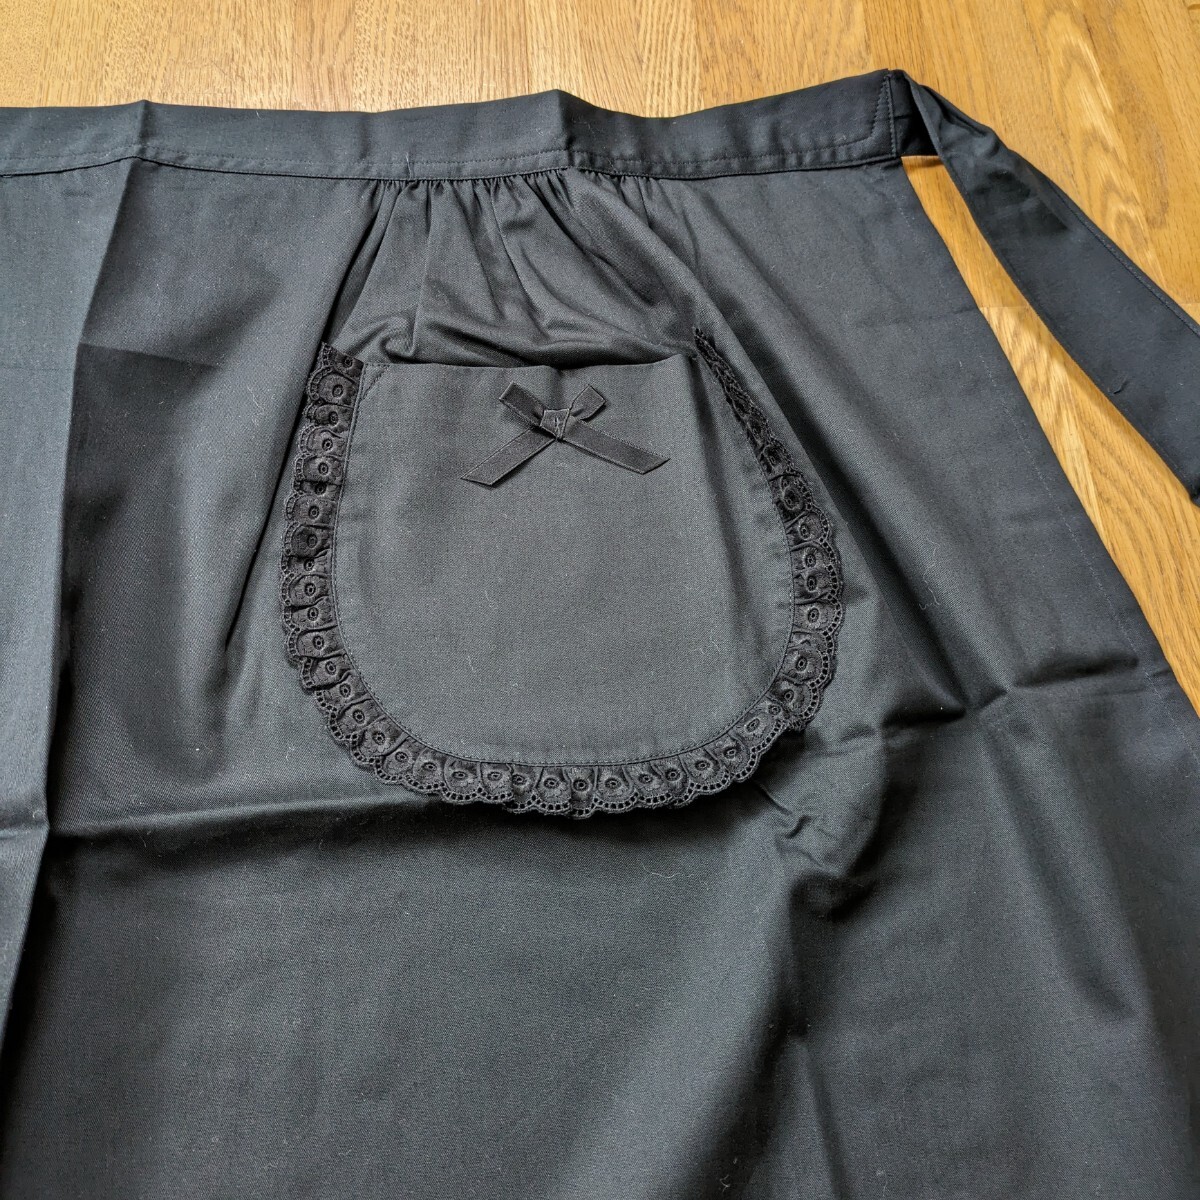  new goods apron black apron made in Japan ( black ) ceremonial occasions salon apron race 